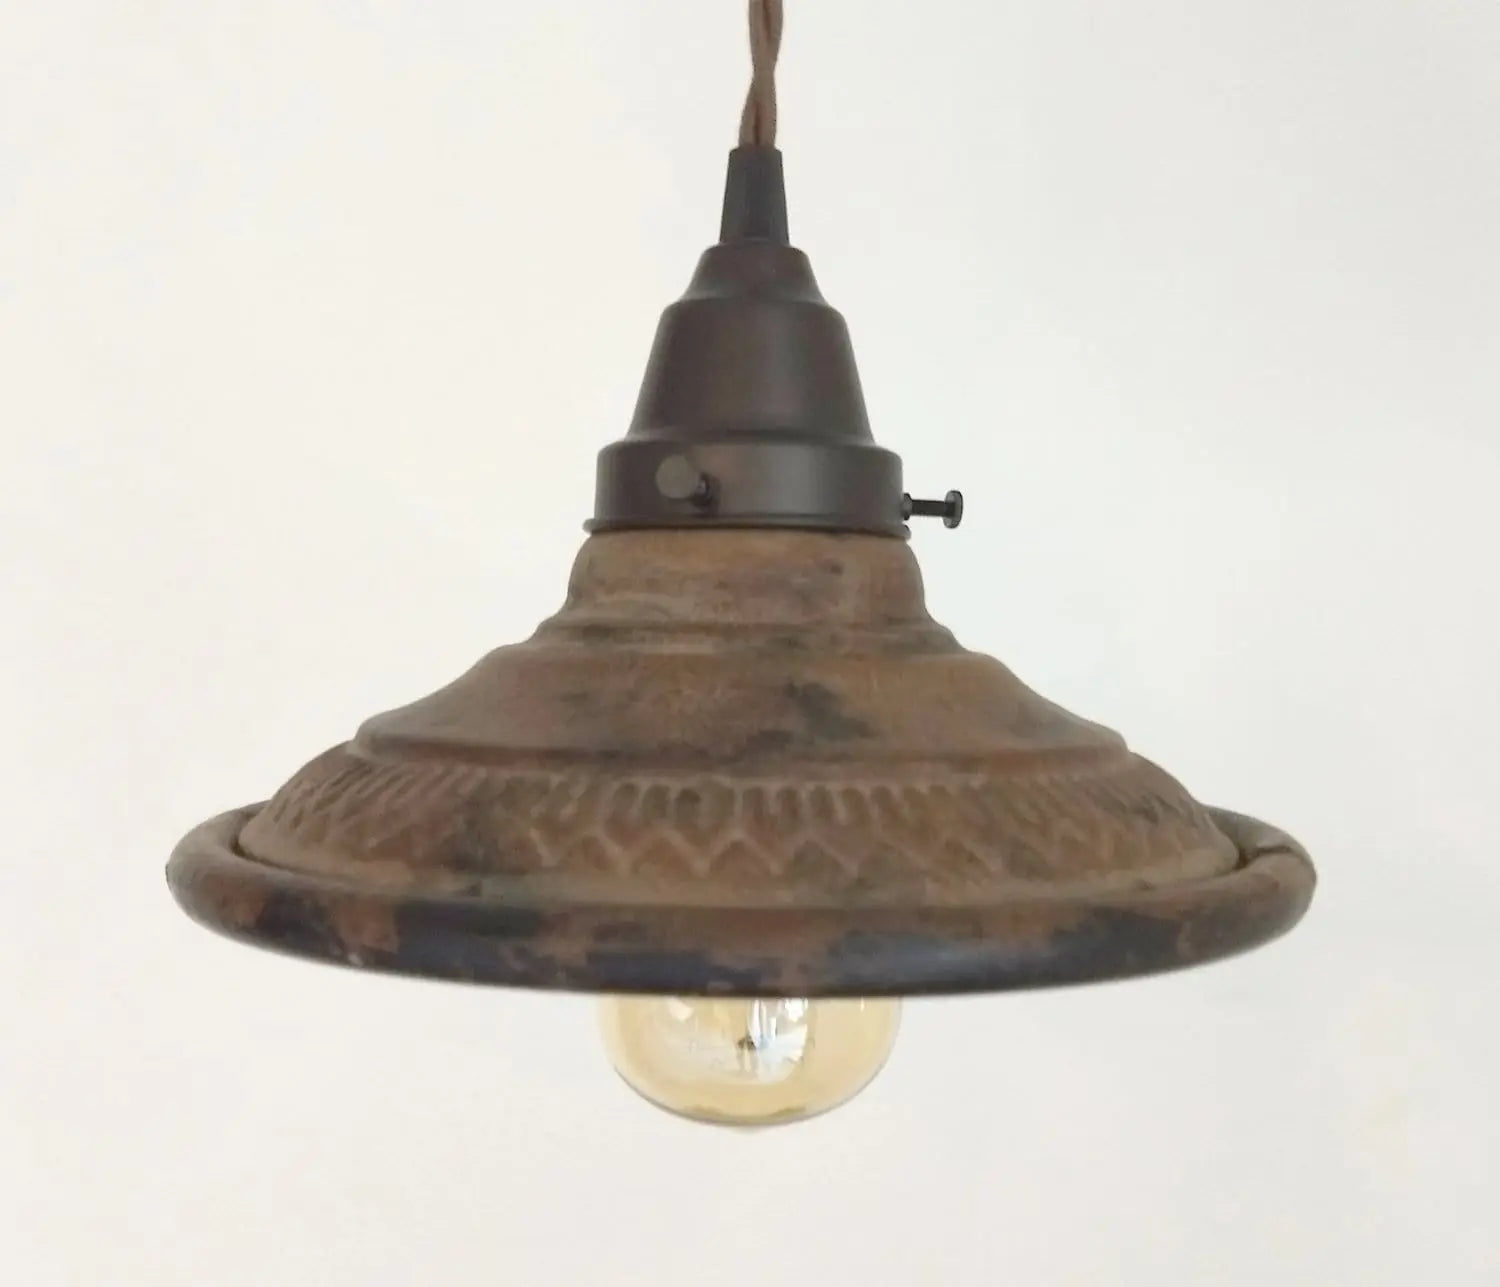 Rustic INDUSTRIAL Pendant Light The Lamp Goods